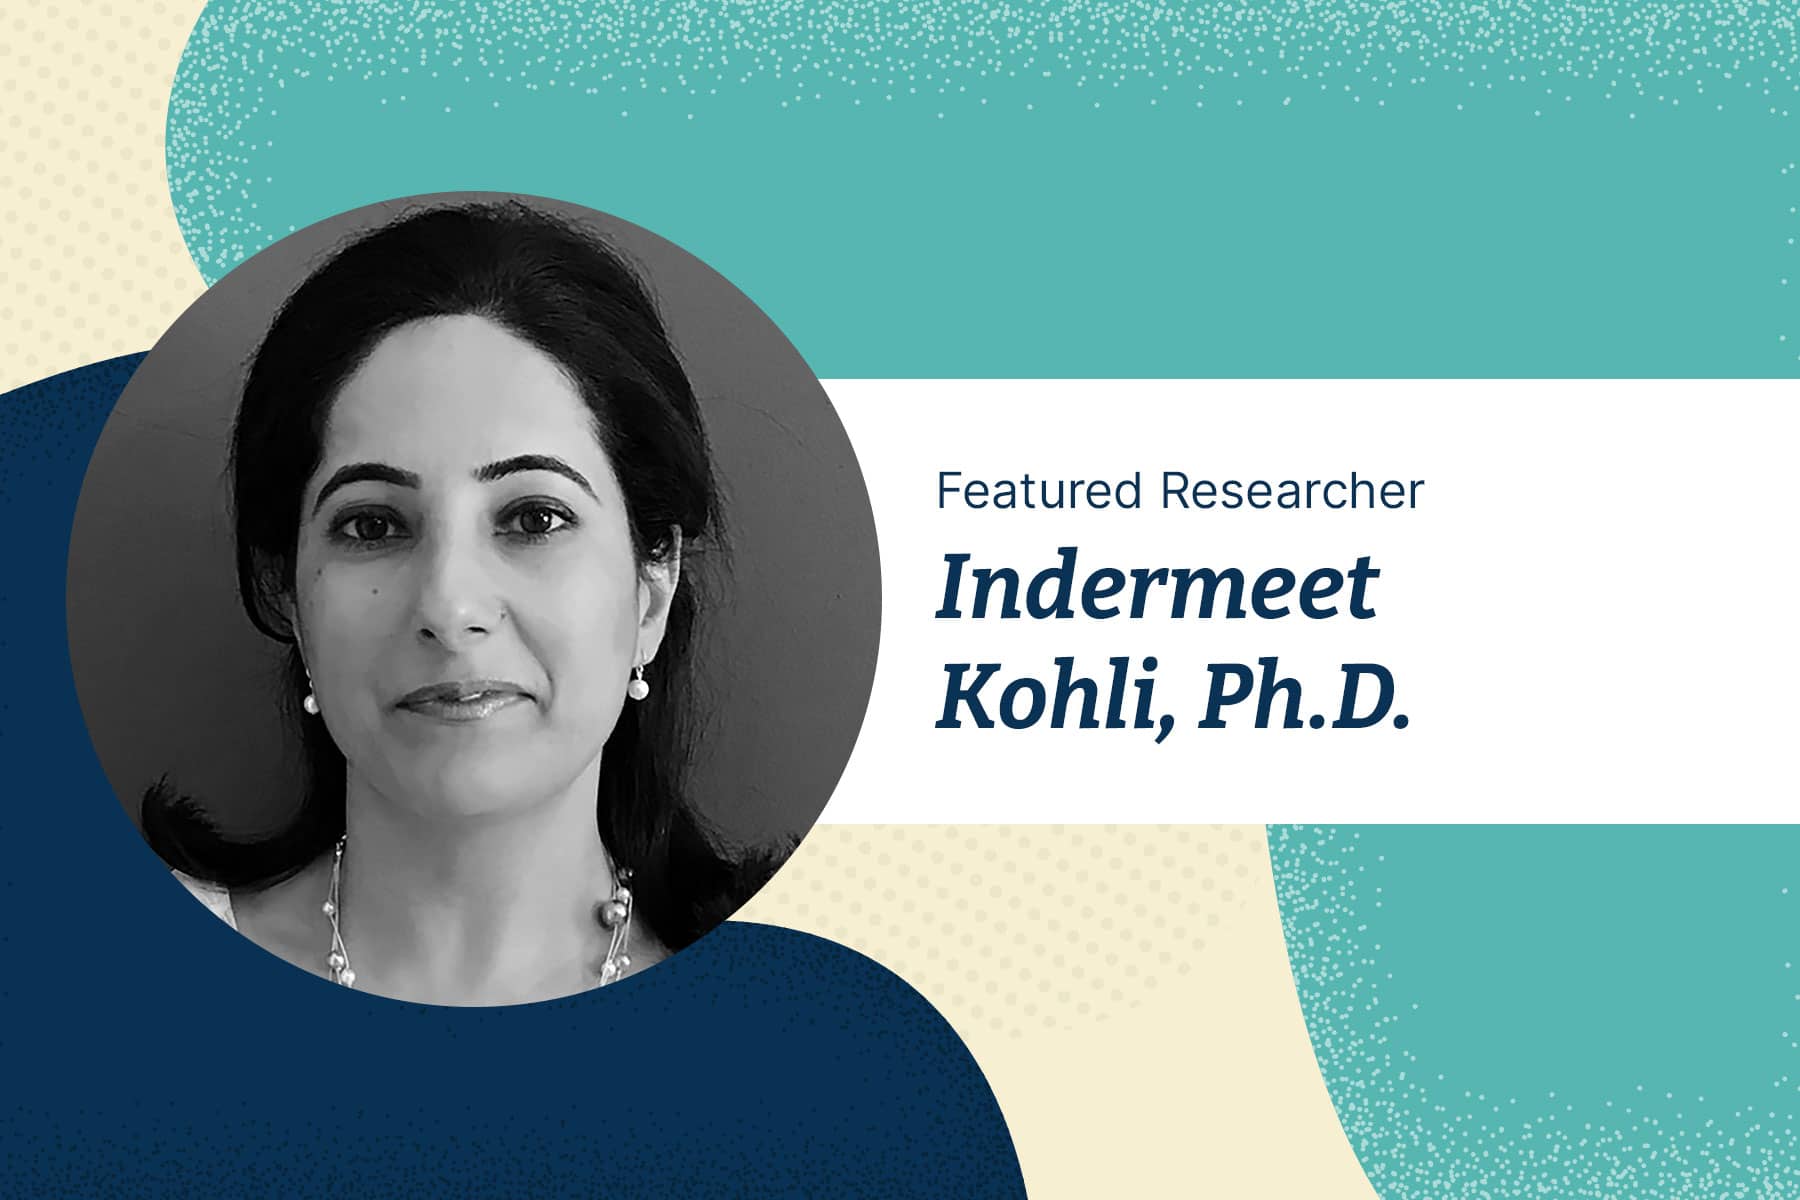 Indermeet Kohli, Ph.D.